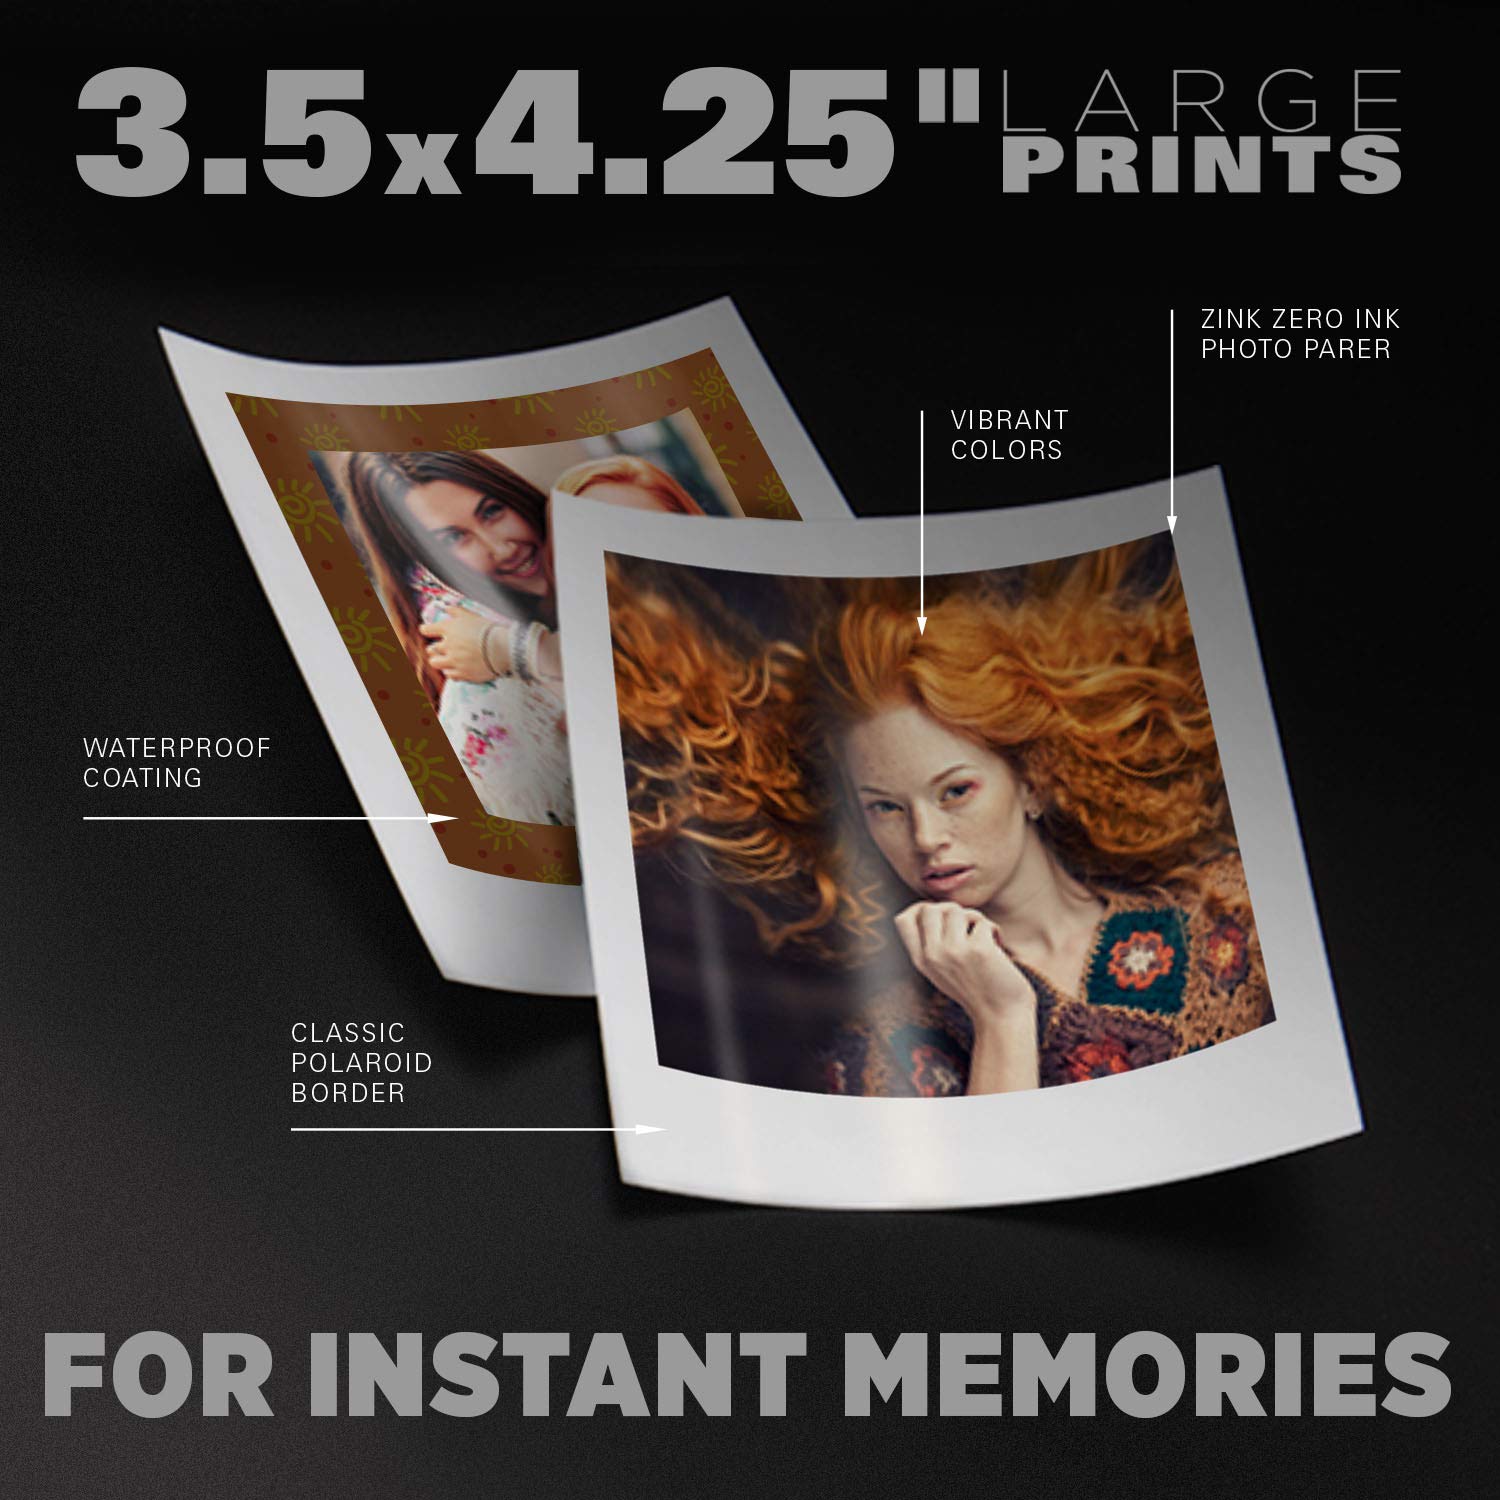 Giveaway Polaroid POP Instant Print Camera Plus Price Reduction